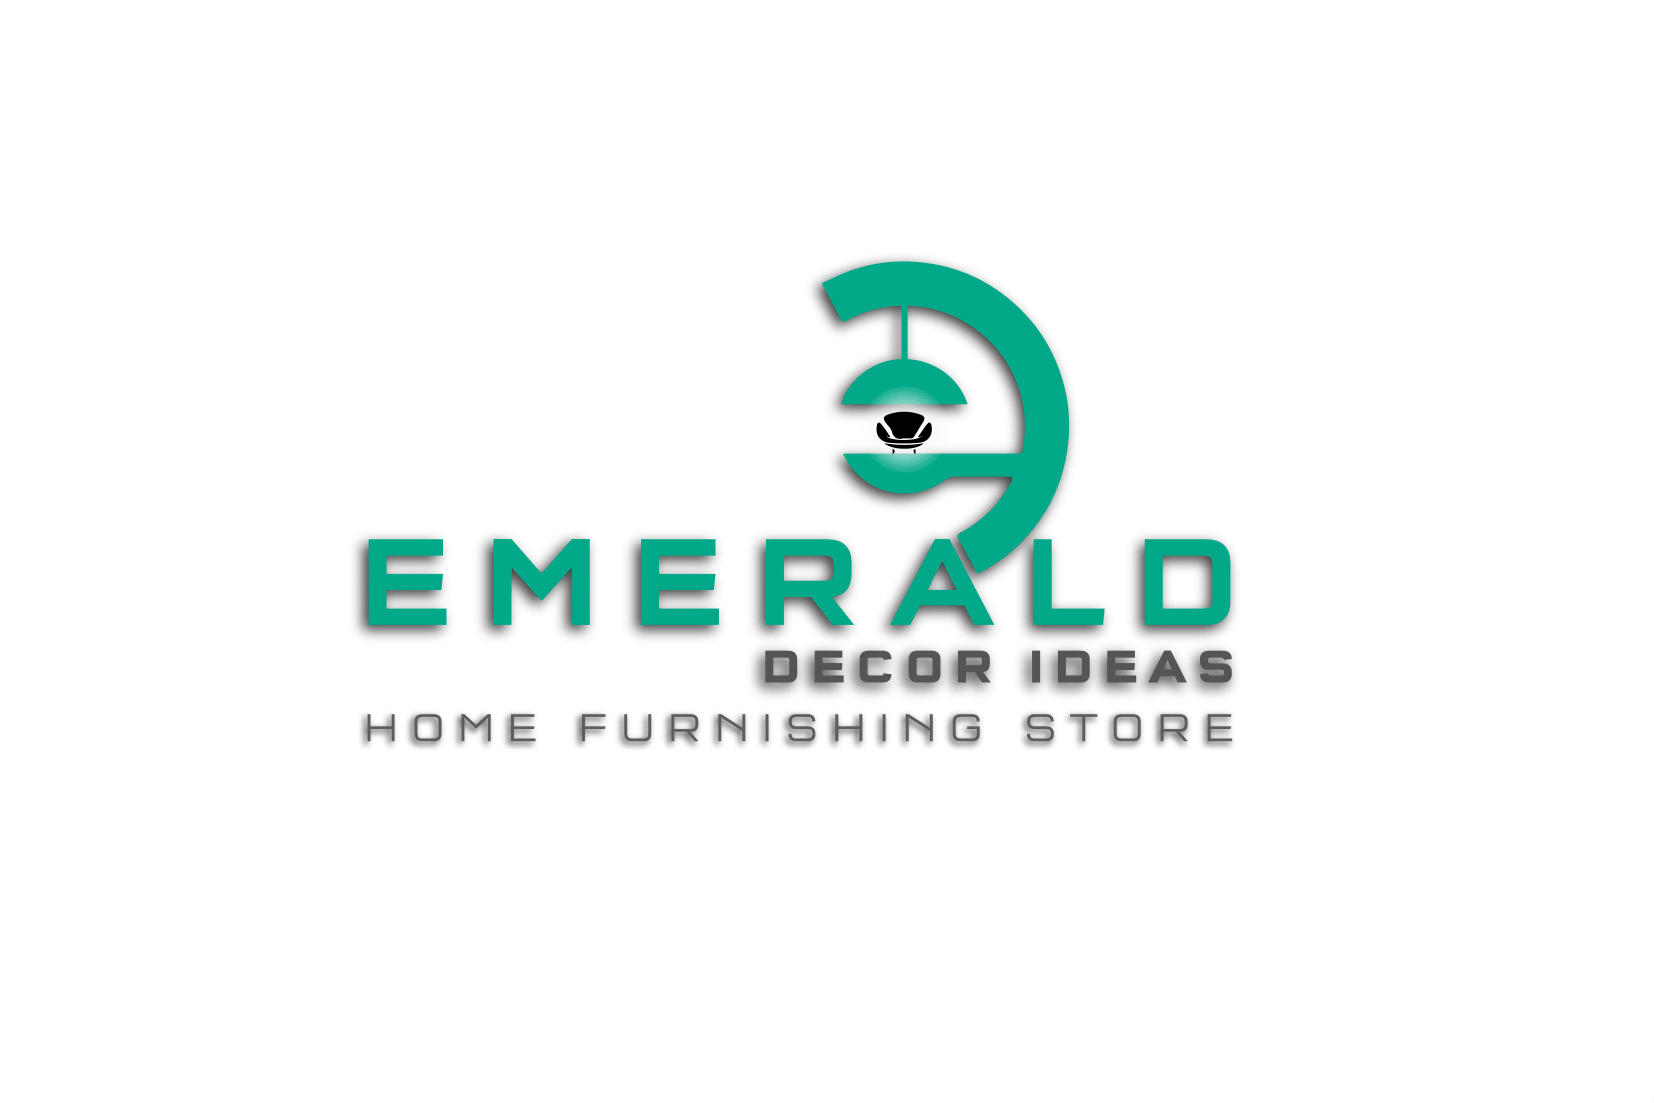 Emerald Decor Ideas